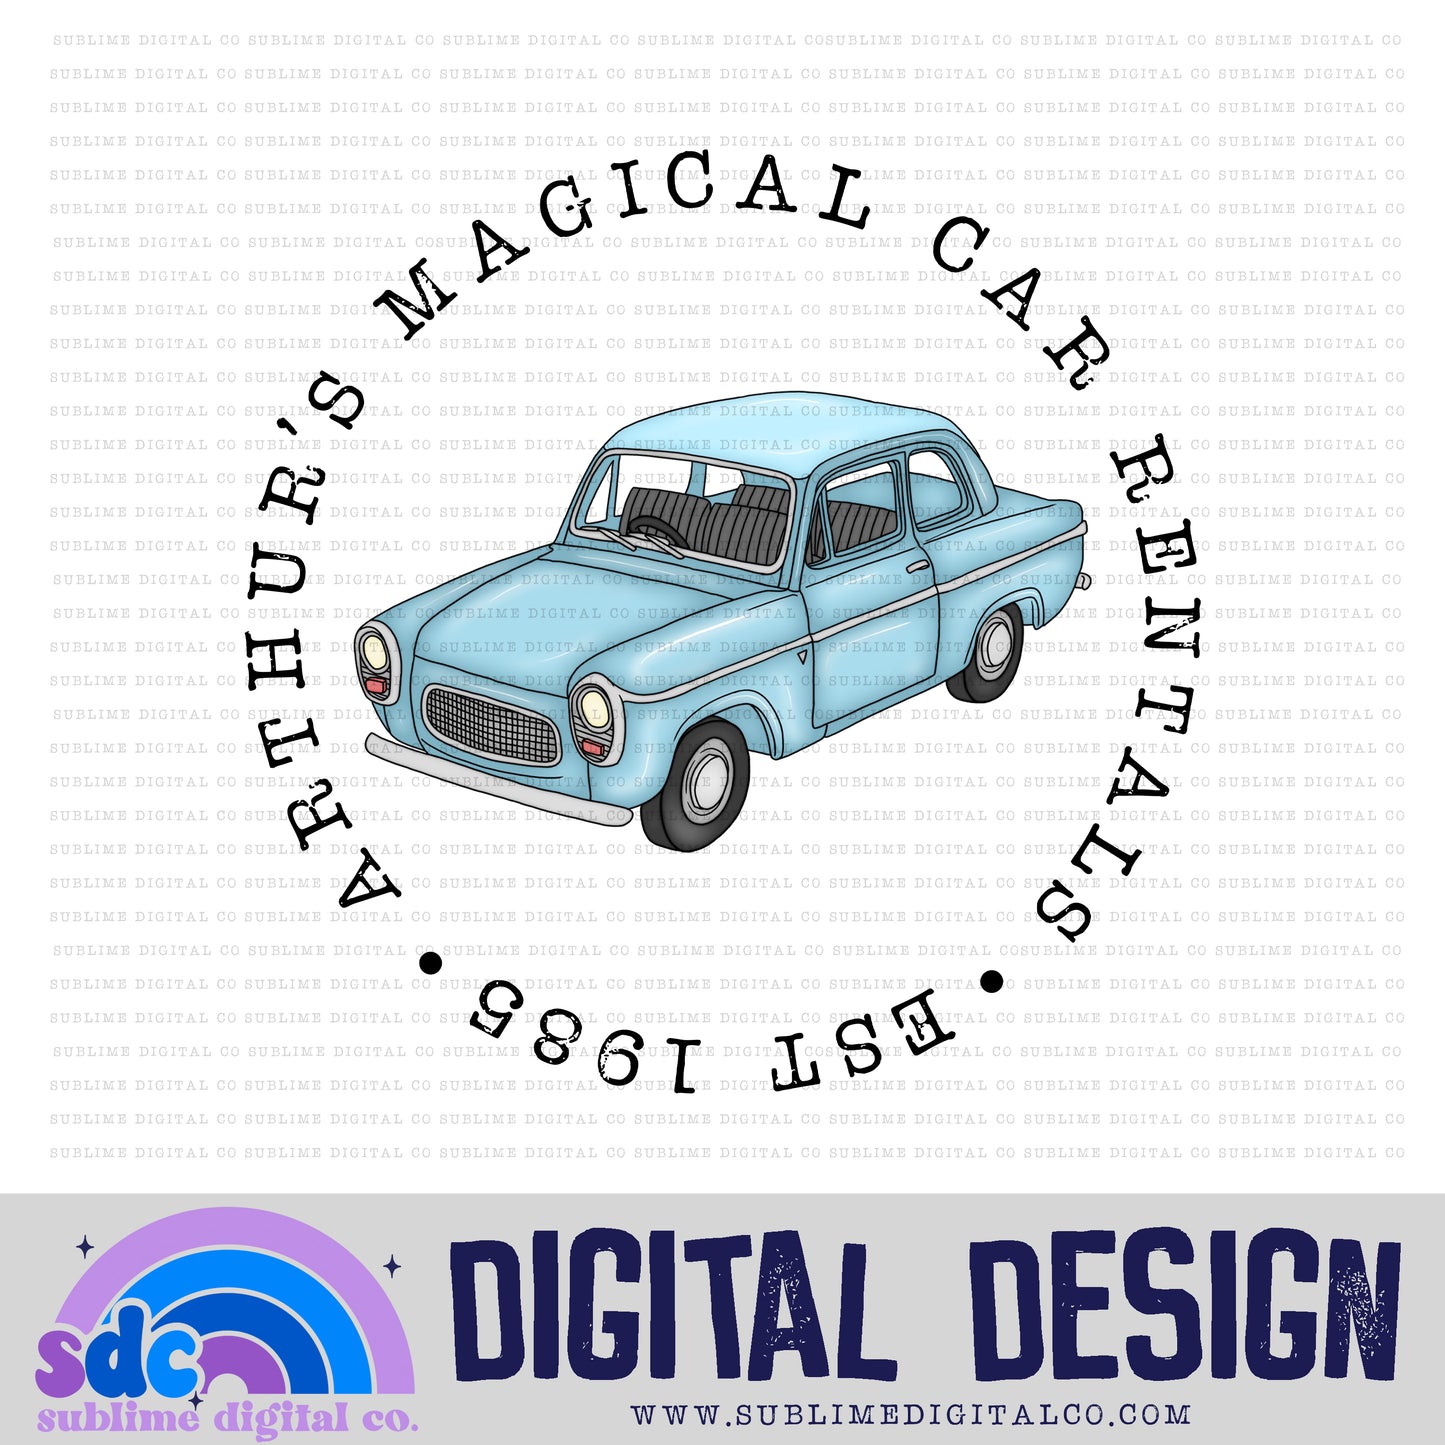 Magical Car Rentals • Wizard • Instant Download • Sublimation Design